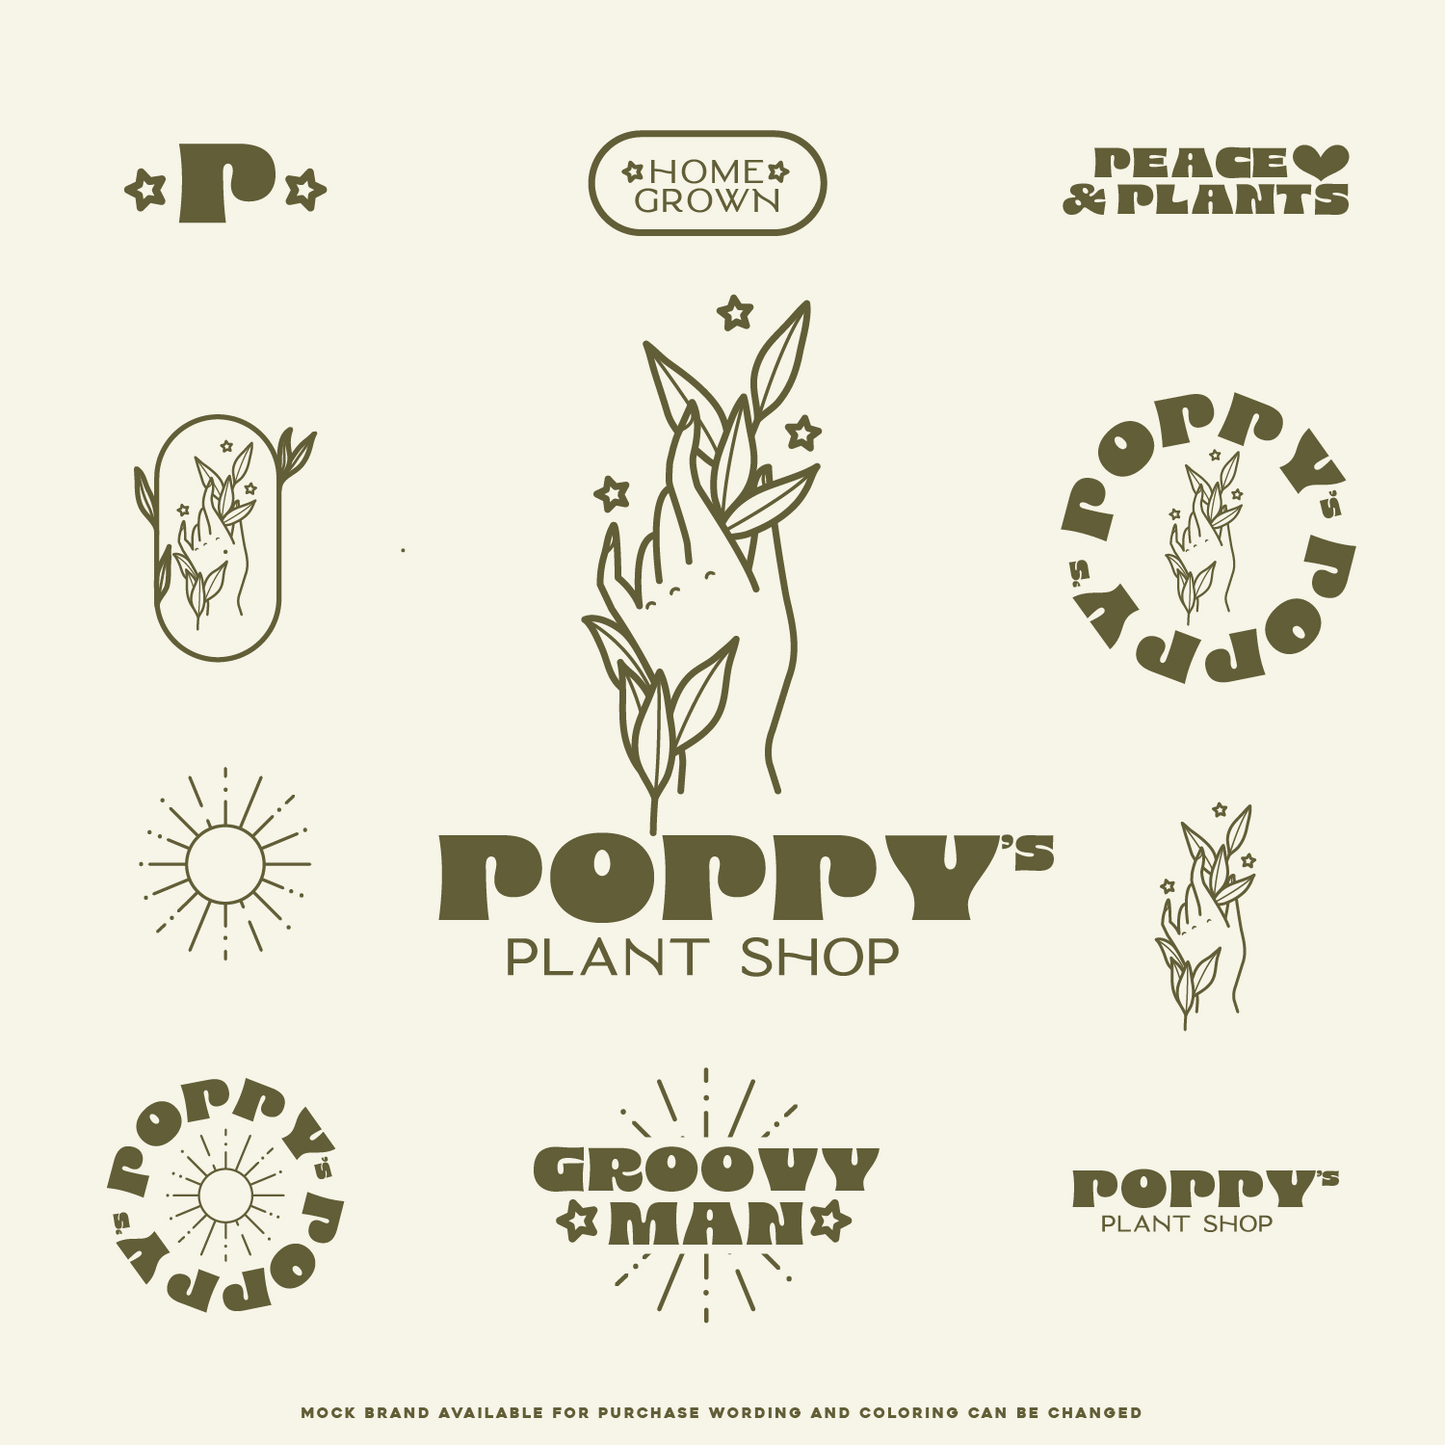 Design set- Mock brand *Poppy's Plants*